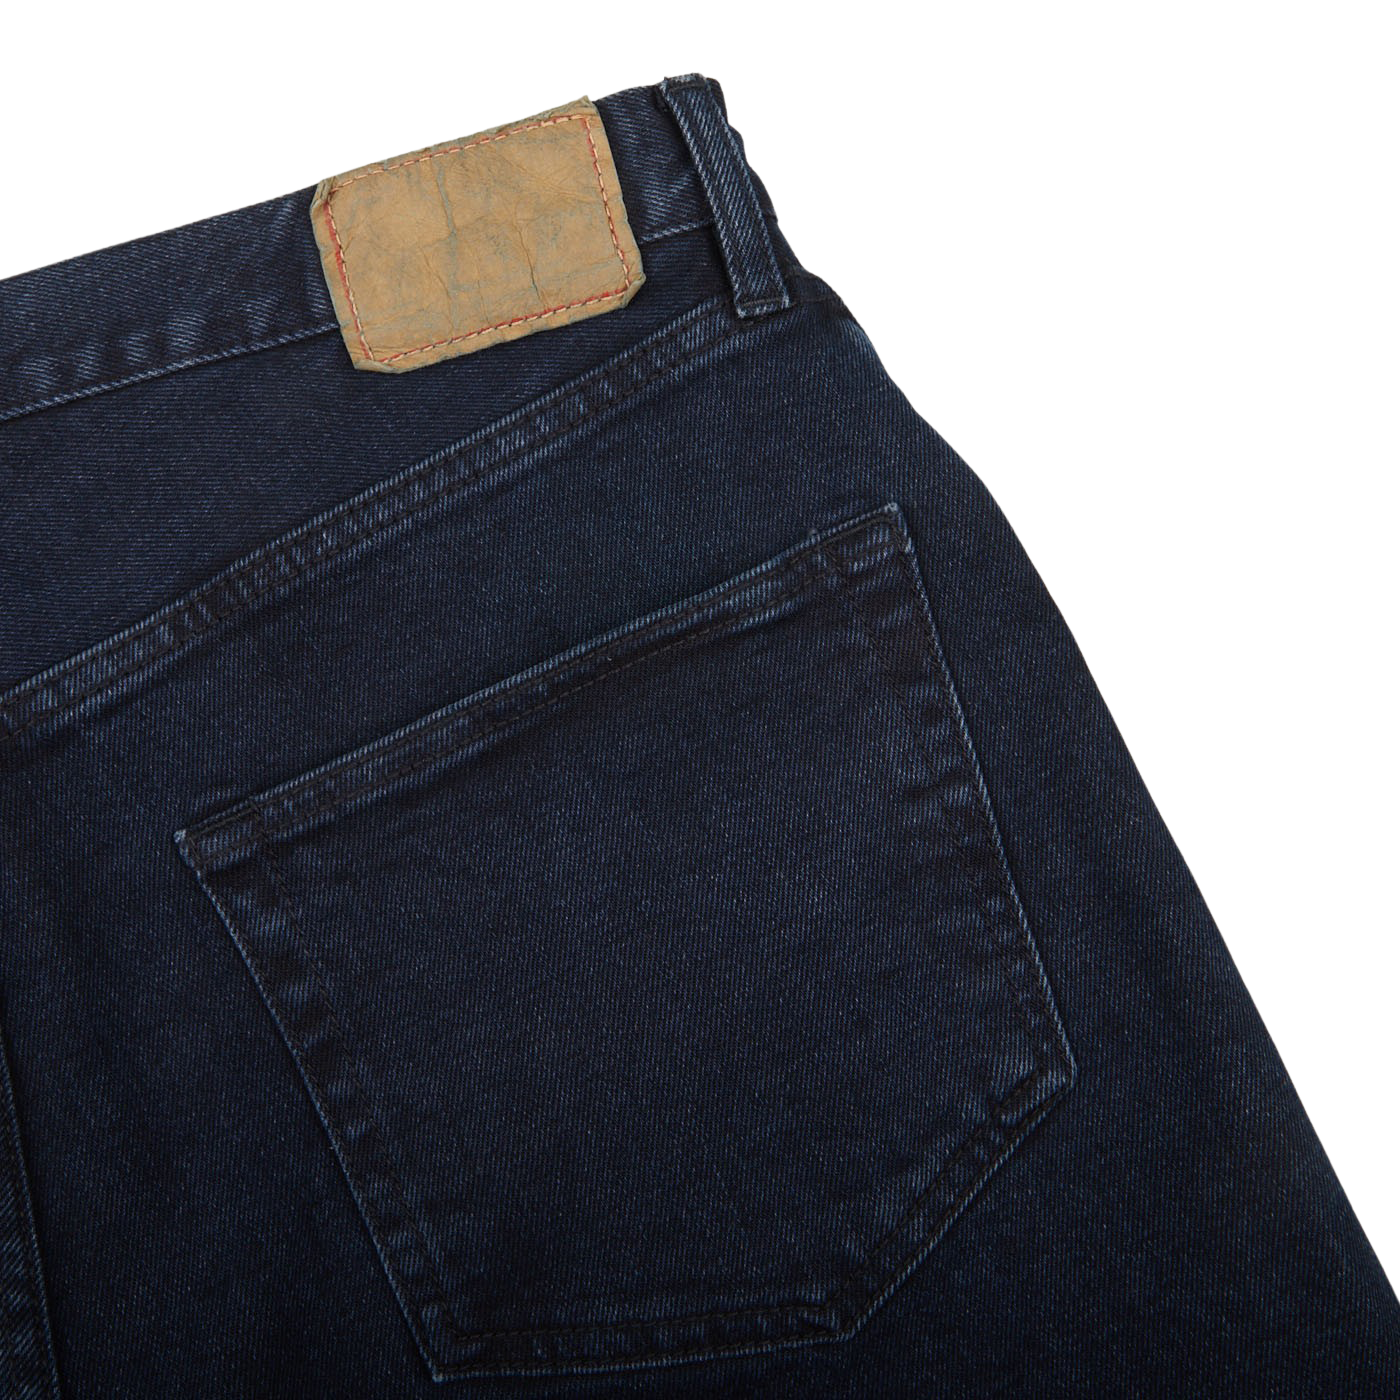 Jeanerica Blue Black Cotton TM005 Jeans Pocket